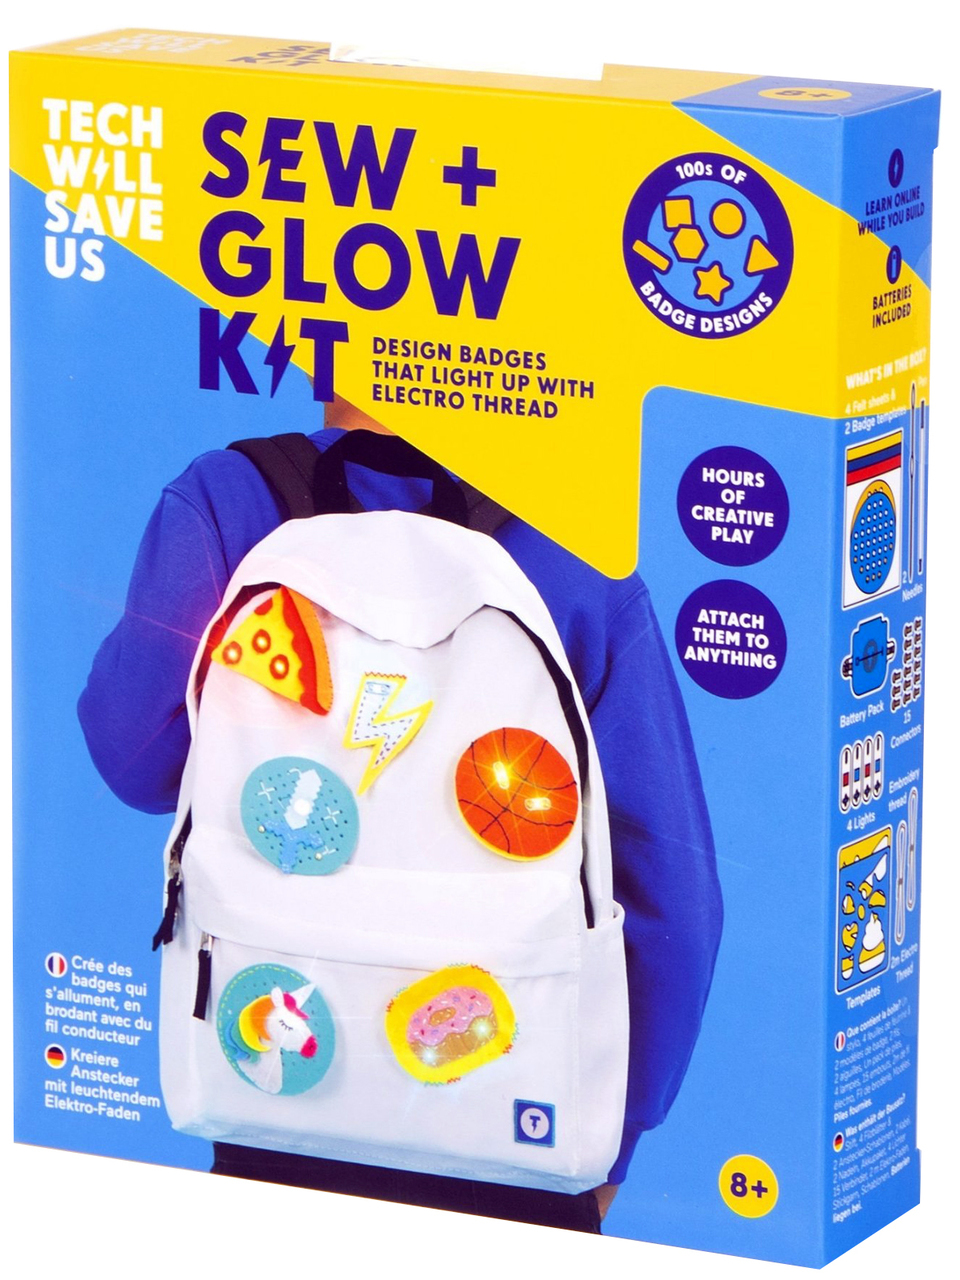 Tech Will Save Us Sew + Glow Kit